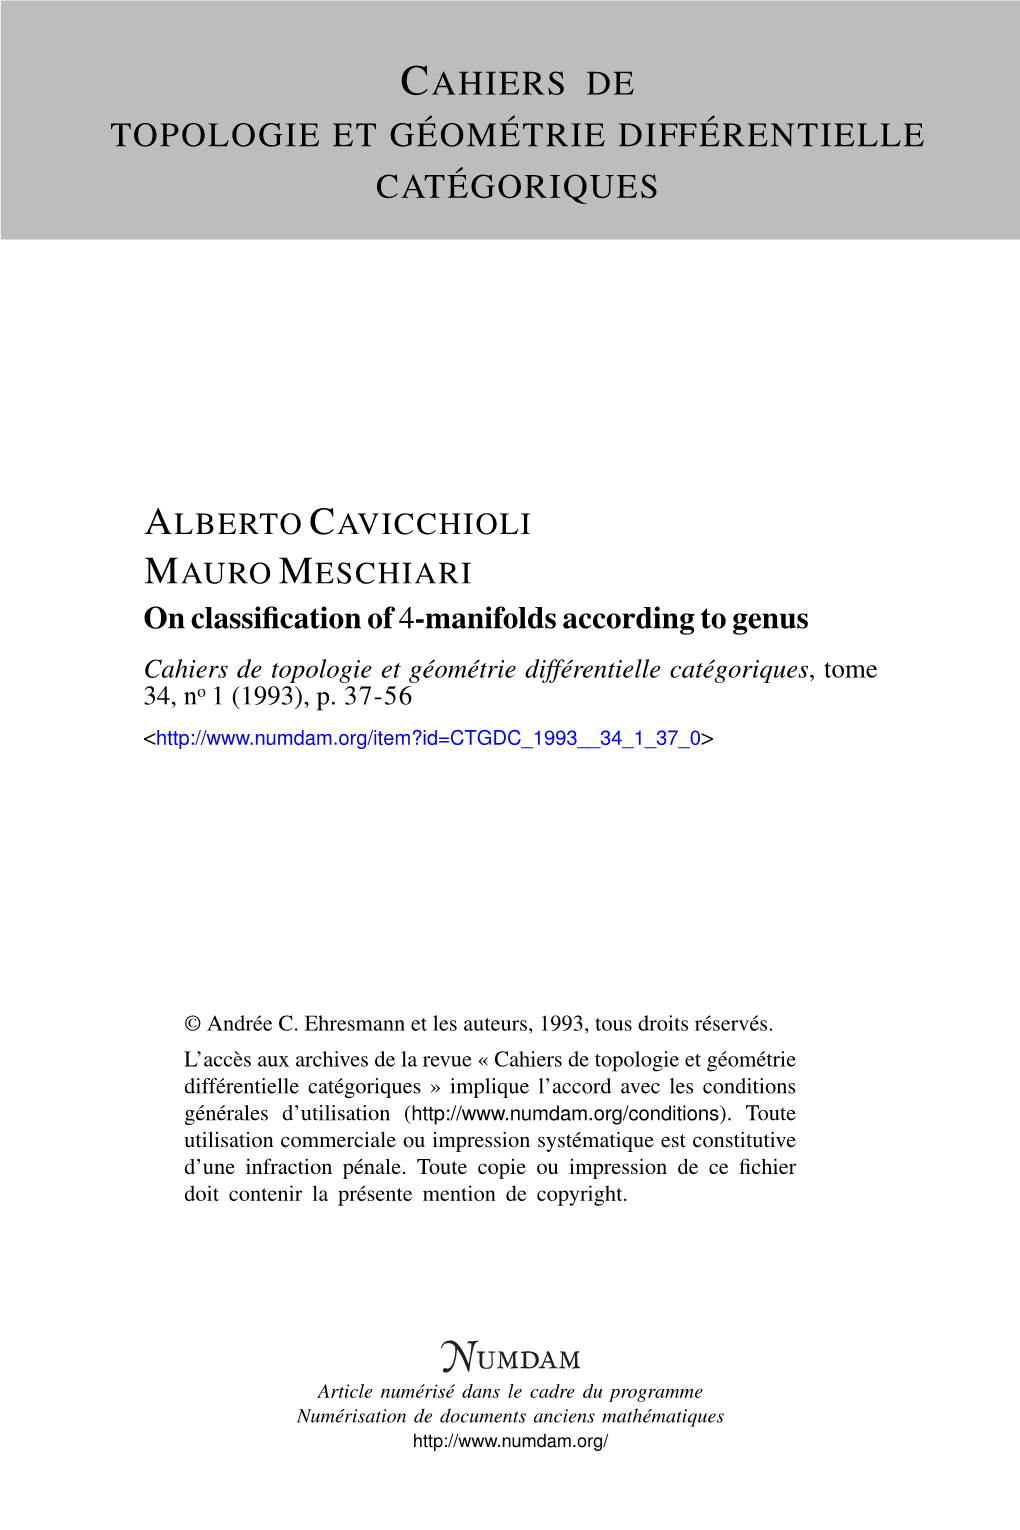 ON CLASSIFICATION of 4-MANIFOLDS ACCORDING to GENUS by Alberto CAVICCHIOLI and Mauro MESCHIARI